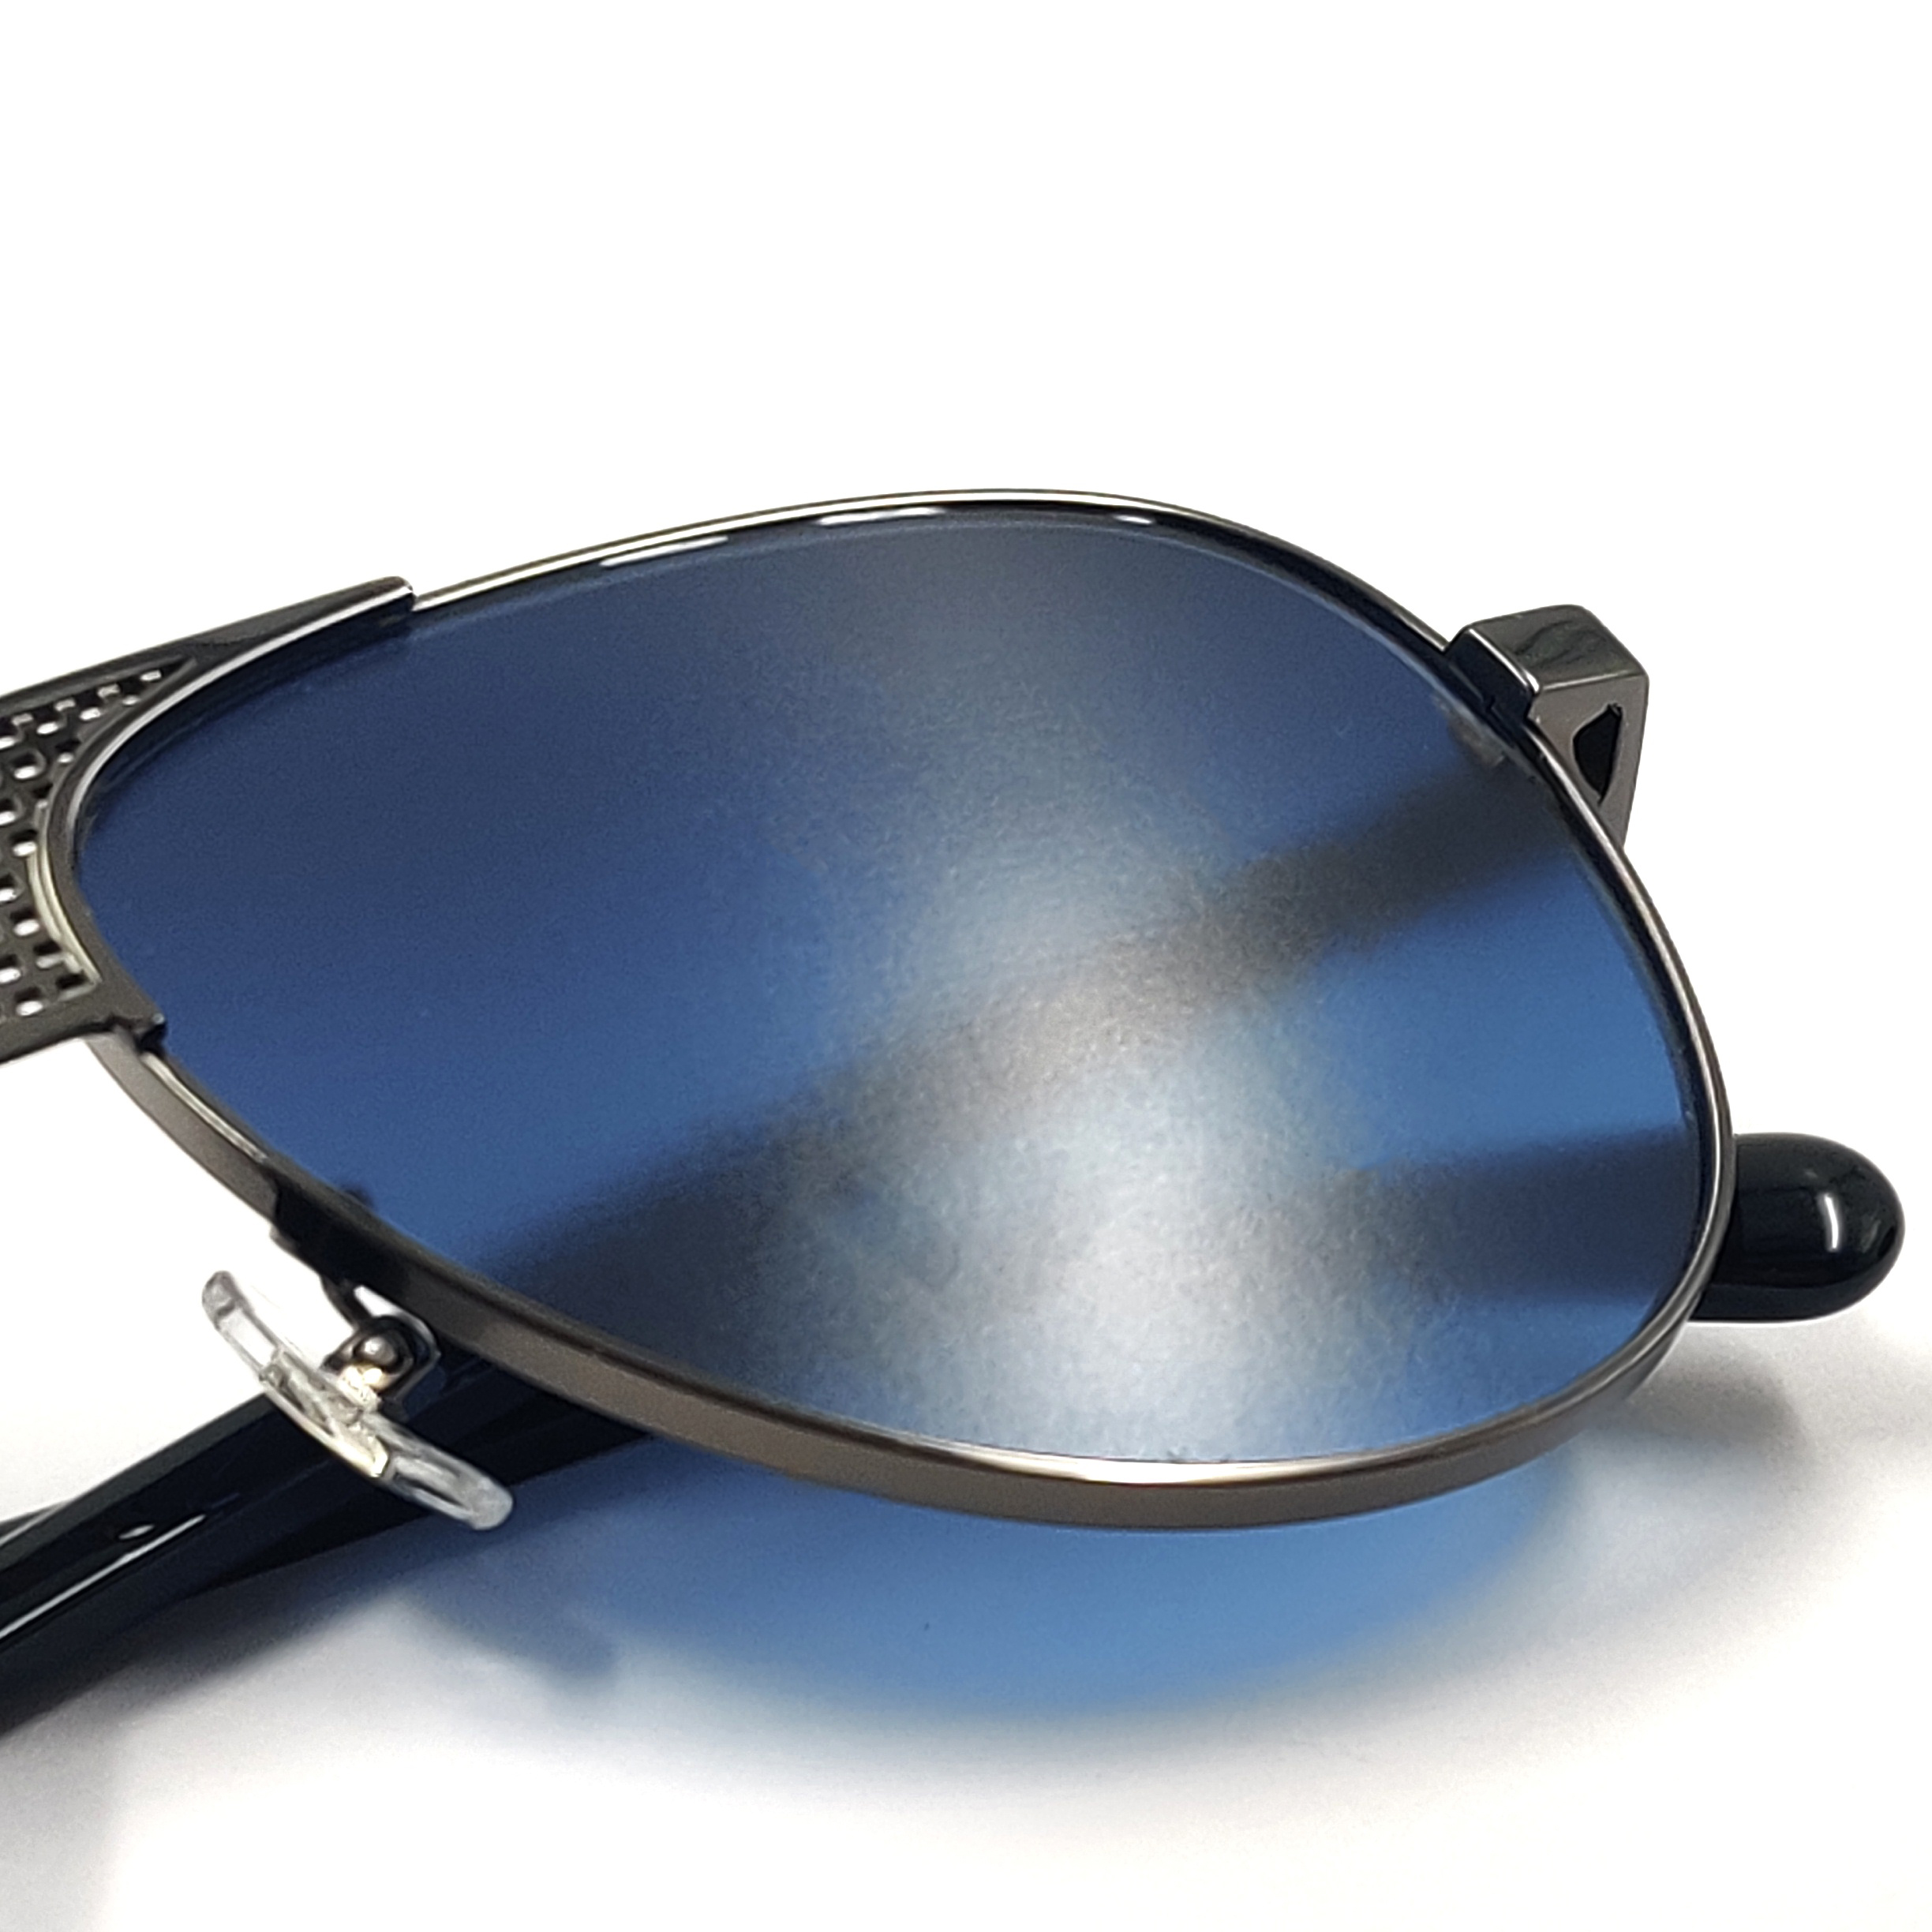 Blue Polarized Lens Men Sunglasses Oem Sunglasses Manufacturers Eyewear Manufacturing Companies